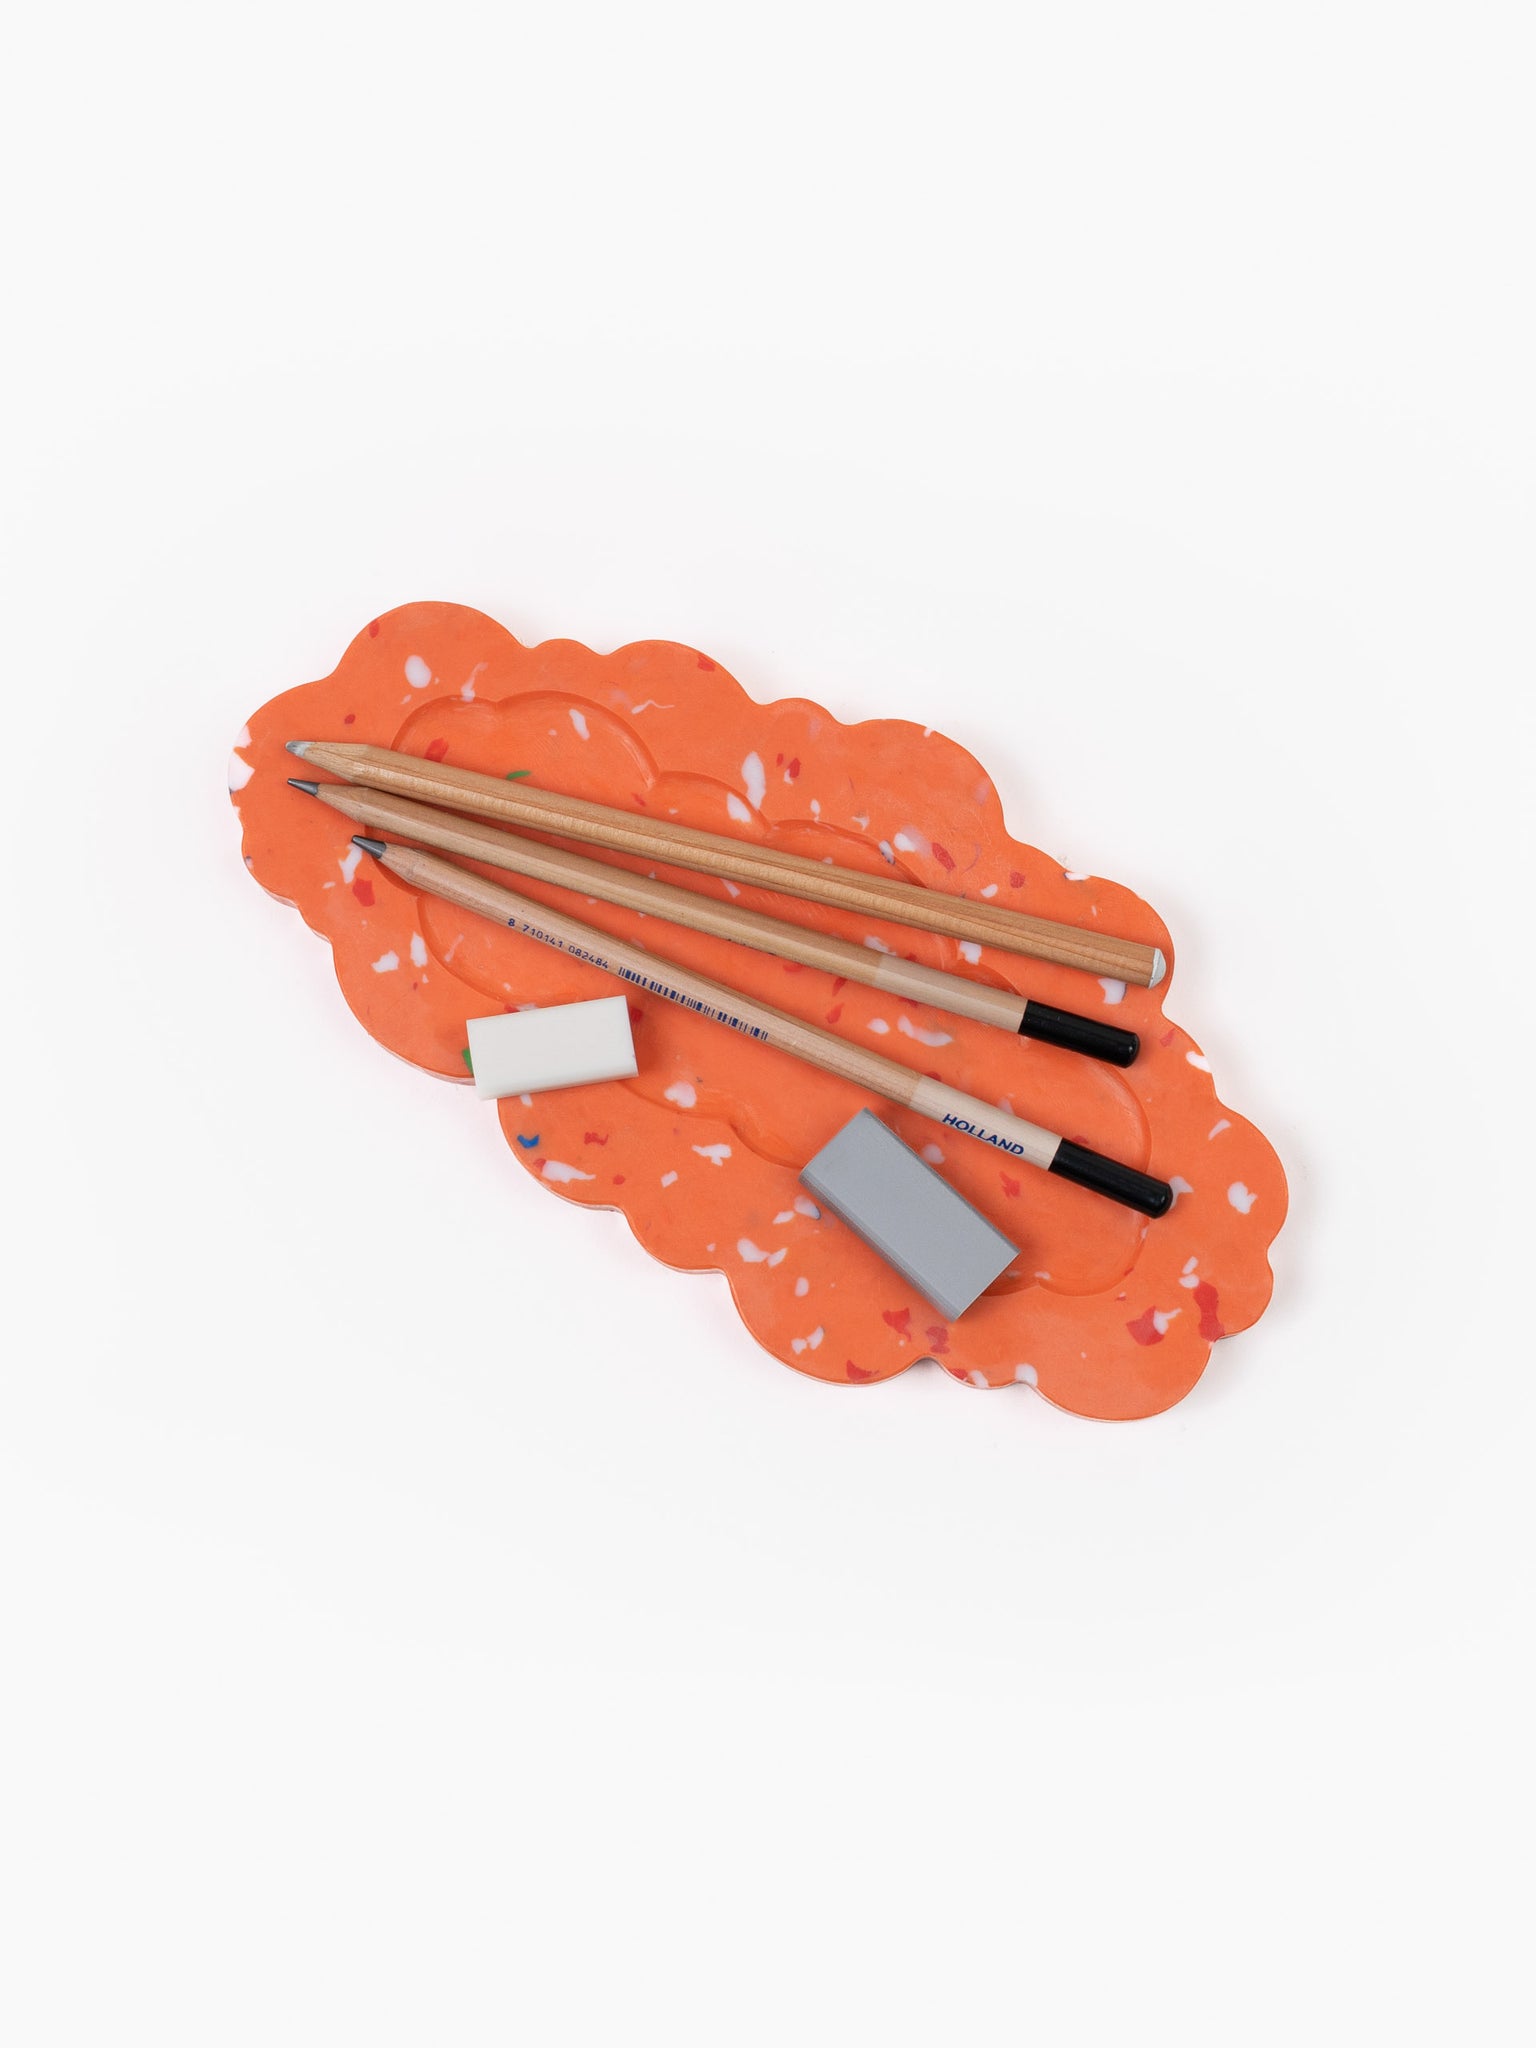 Clouded Desk Tray Orange